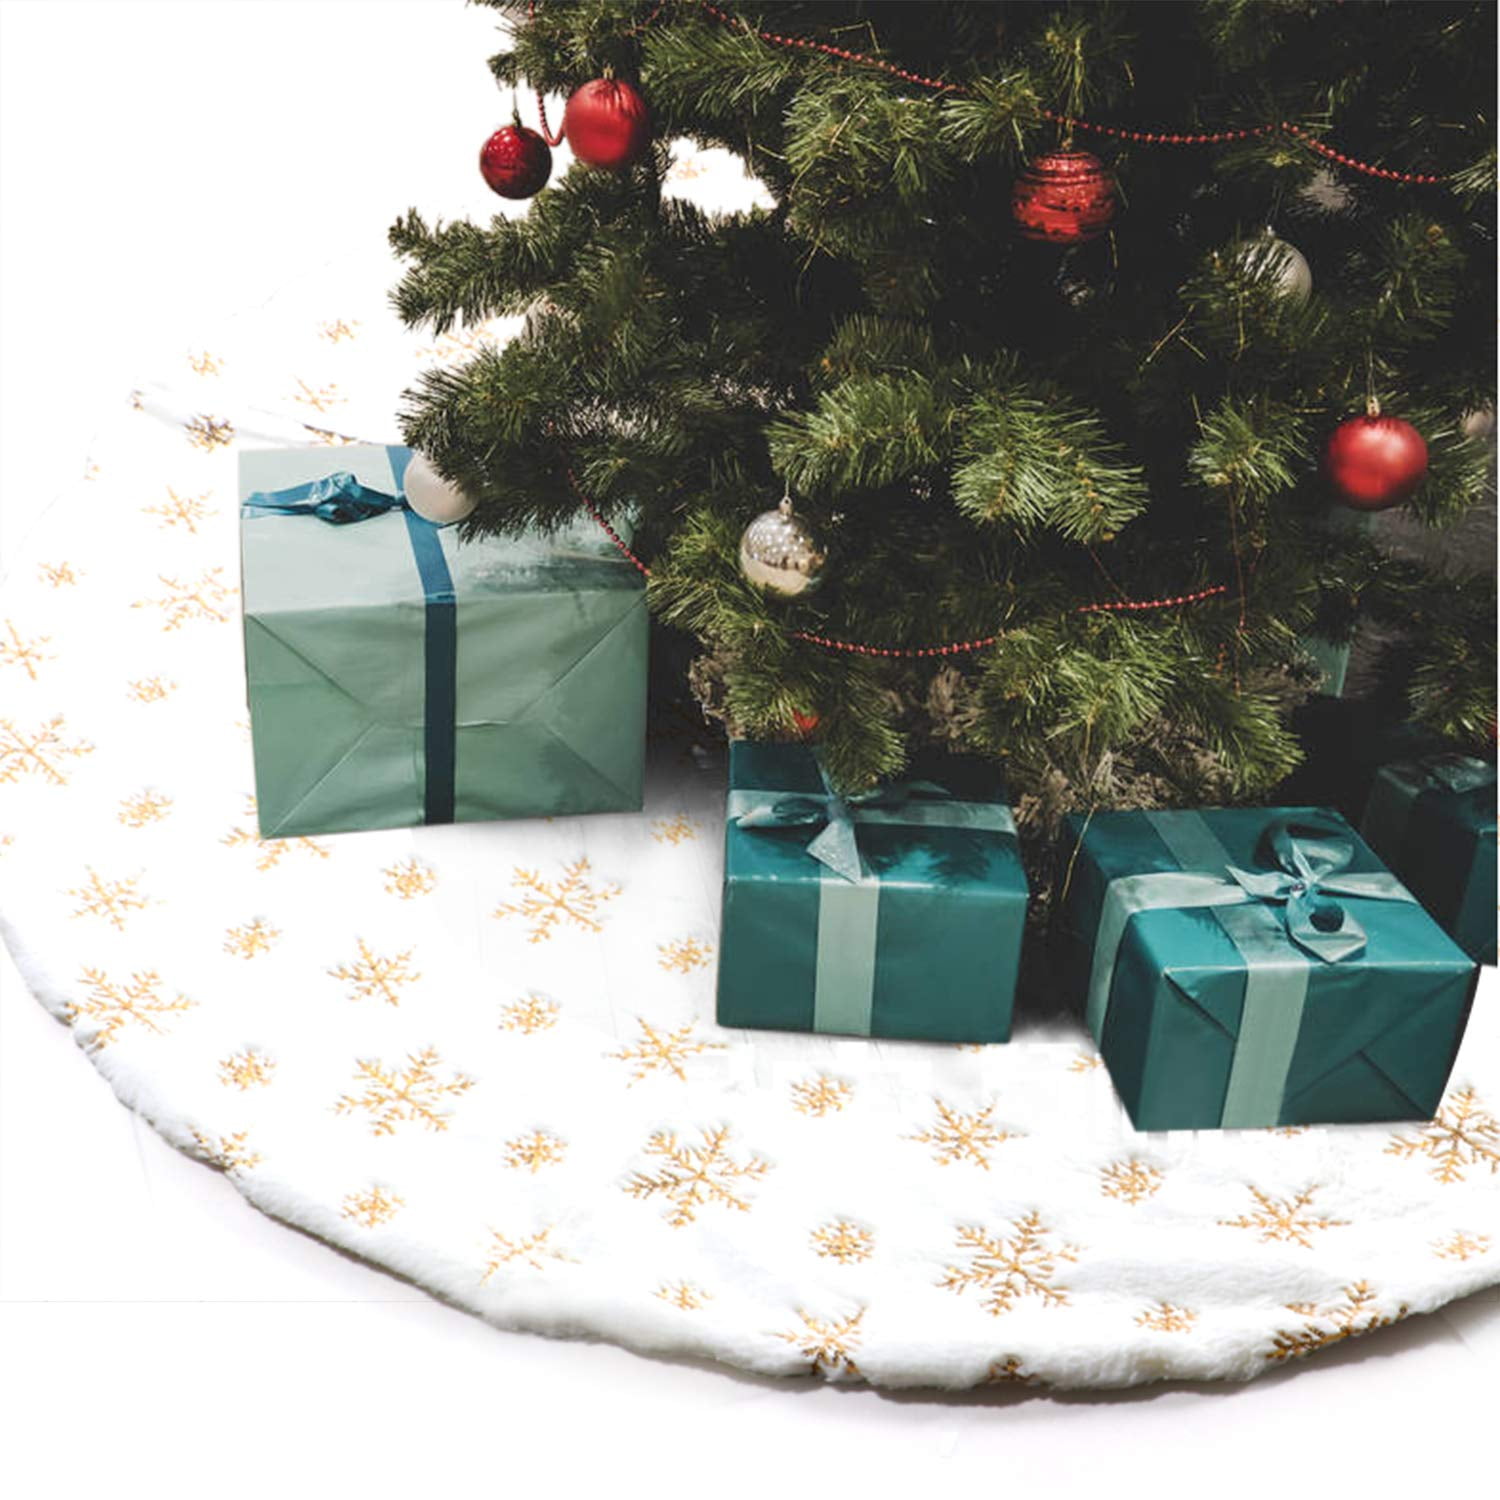 Details about   Christmas Tree Skirt Plush Mat Faux Fur Home Xmas Floor Decor Ornament Party US